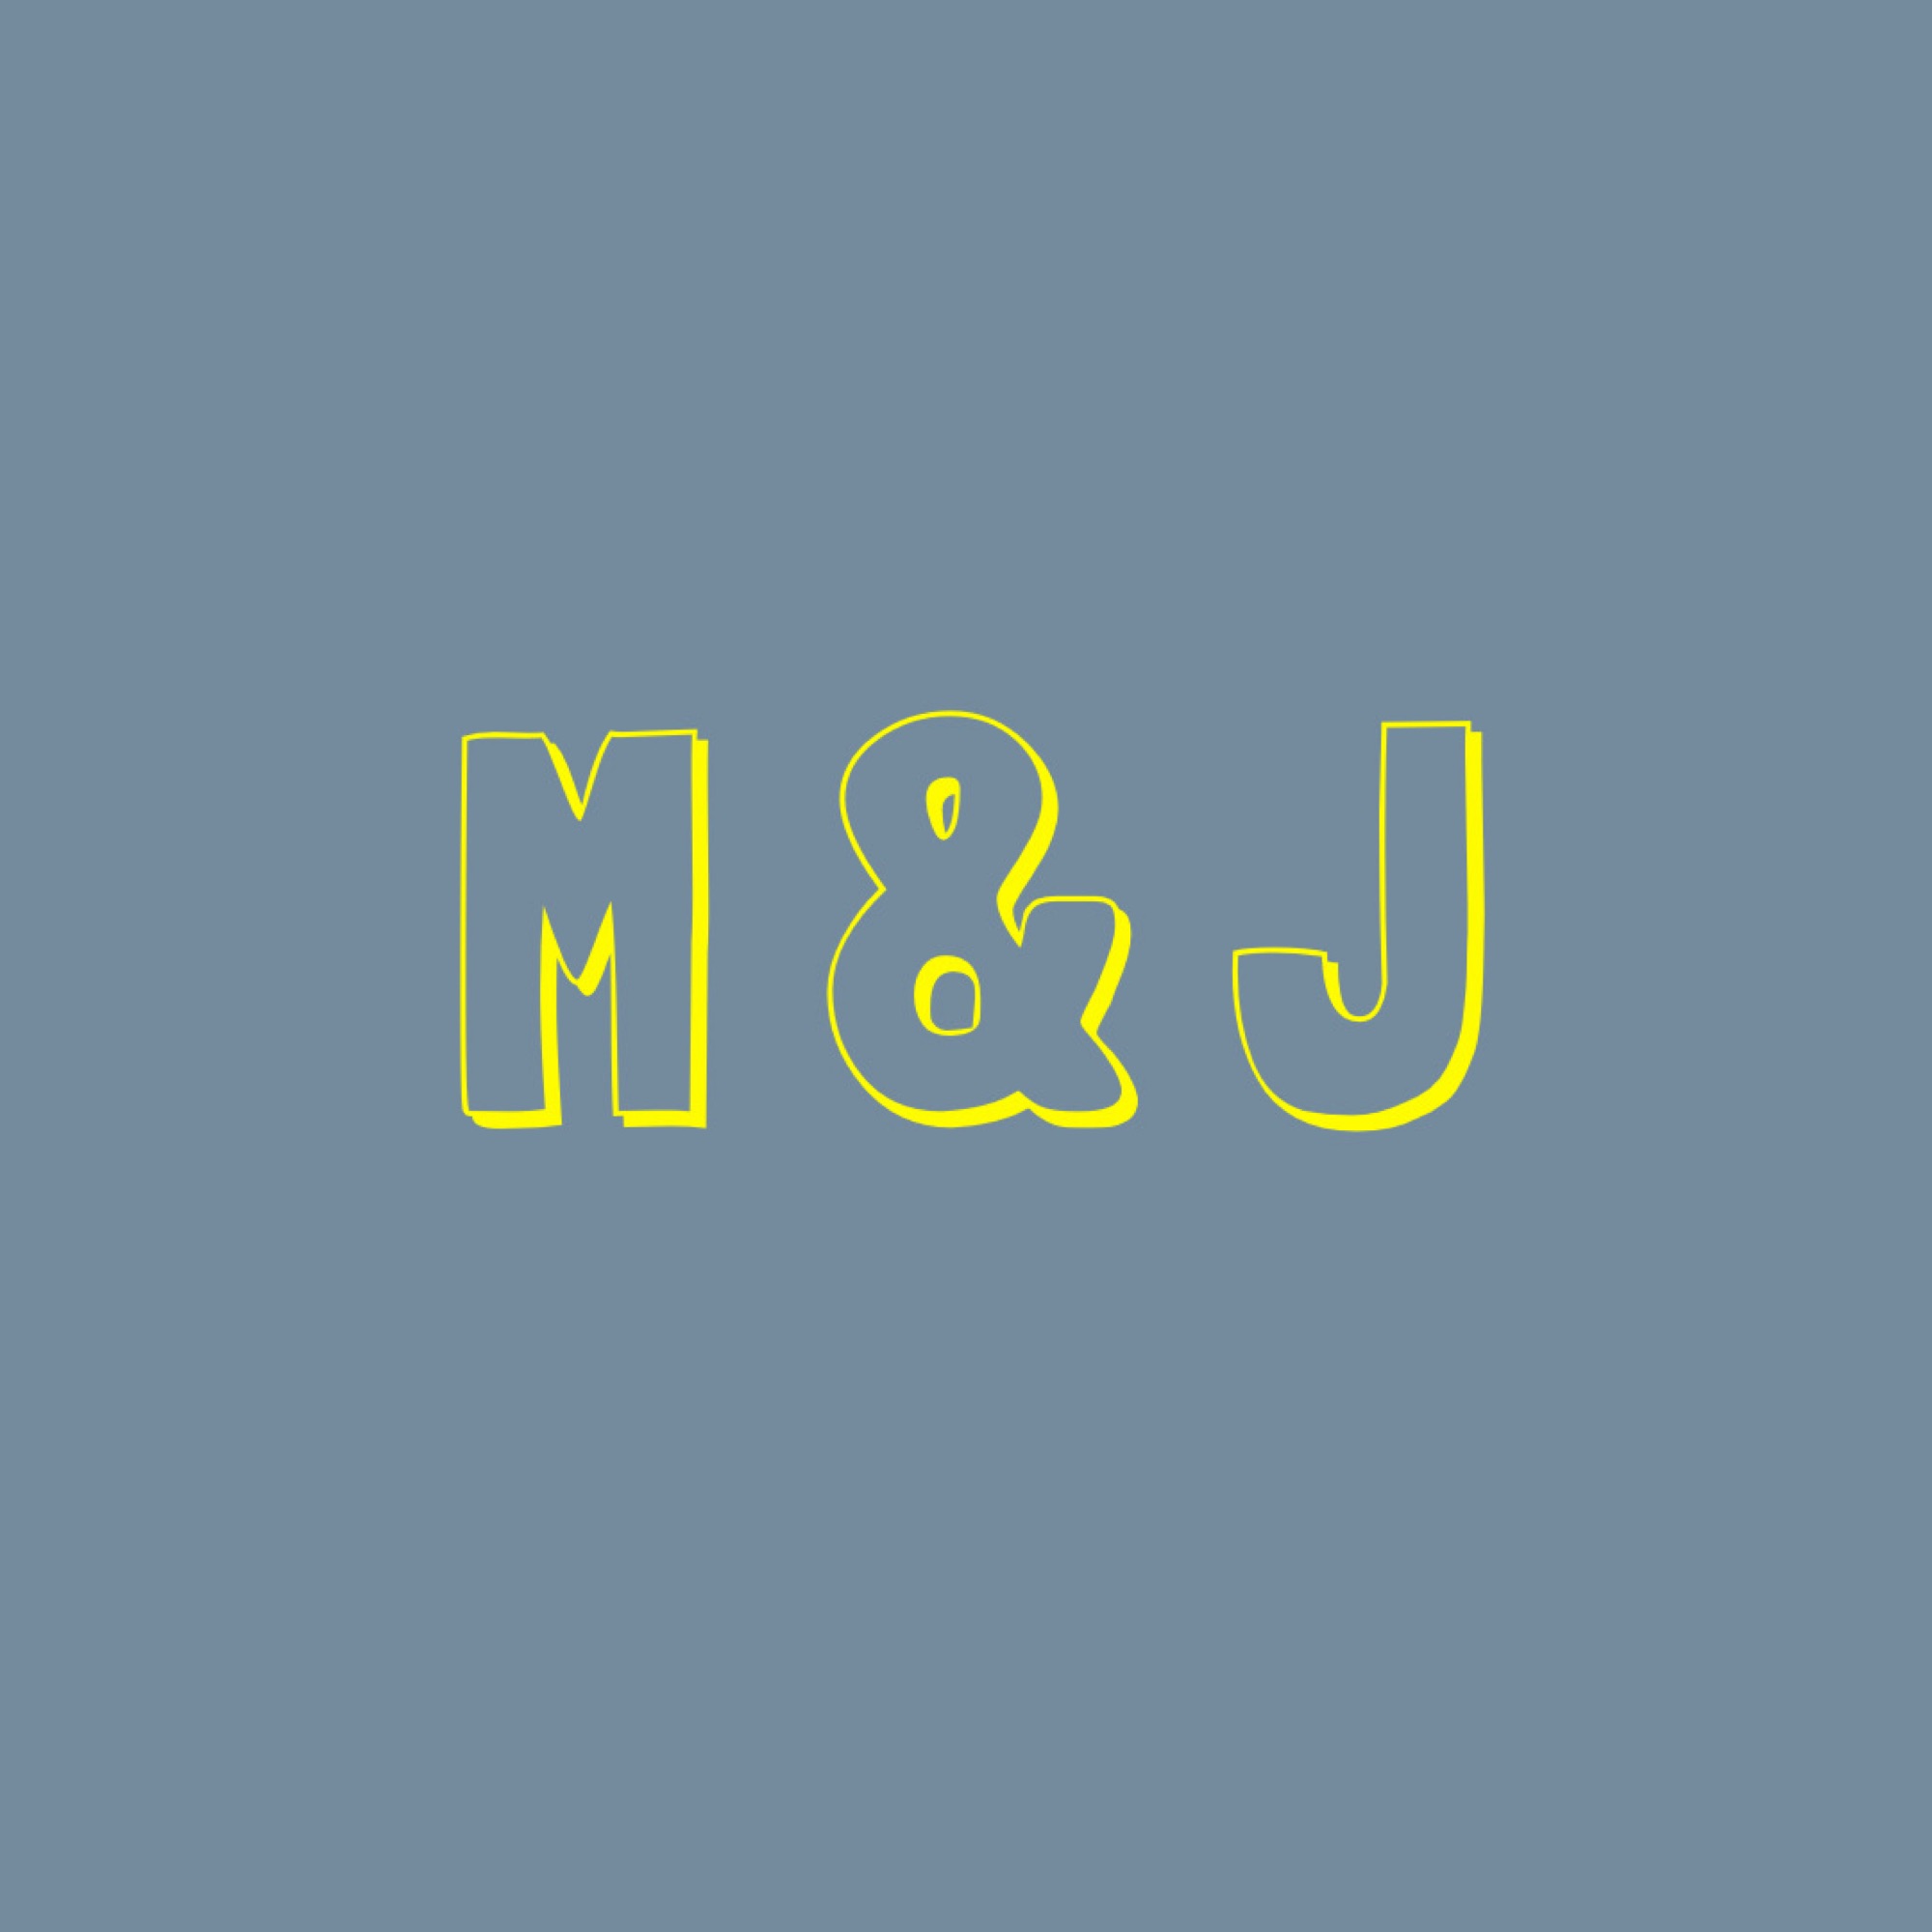 M&J Services Logo